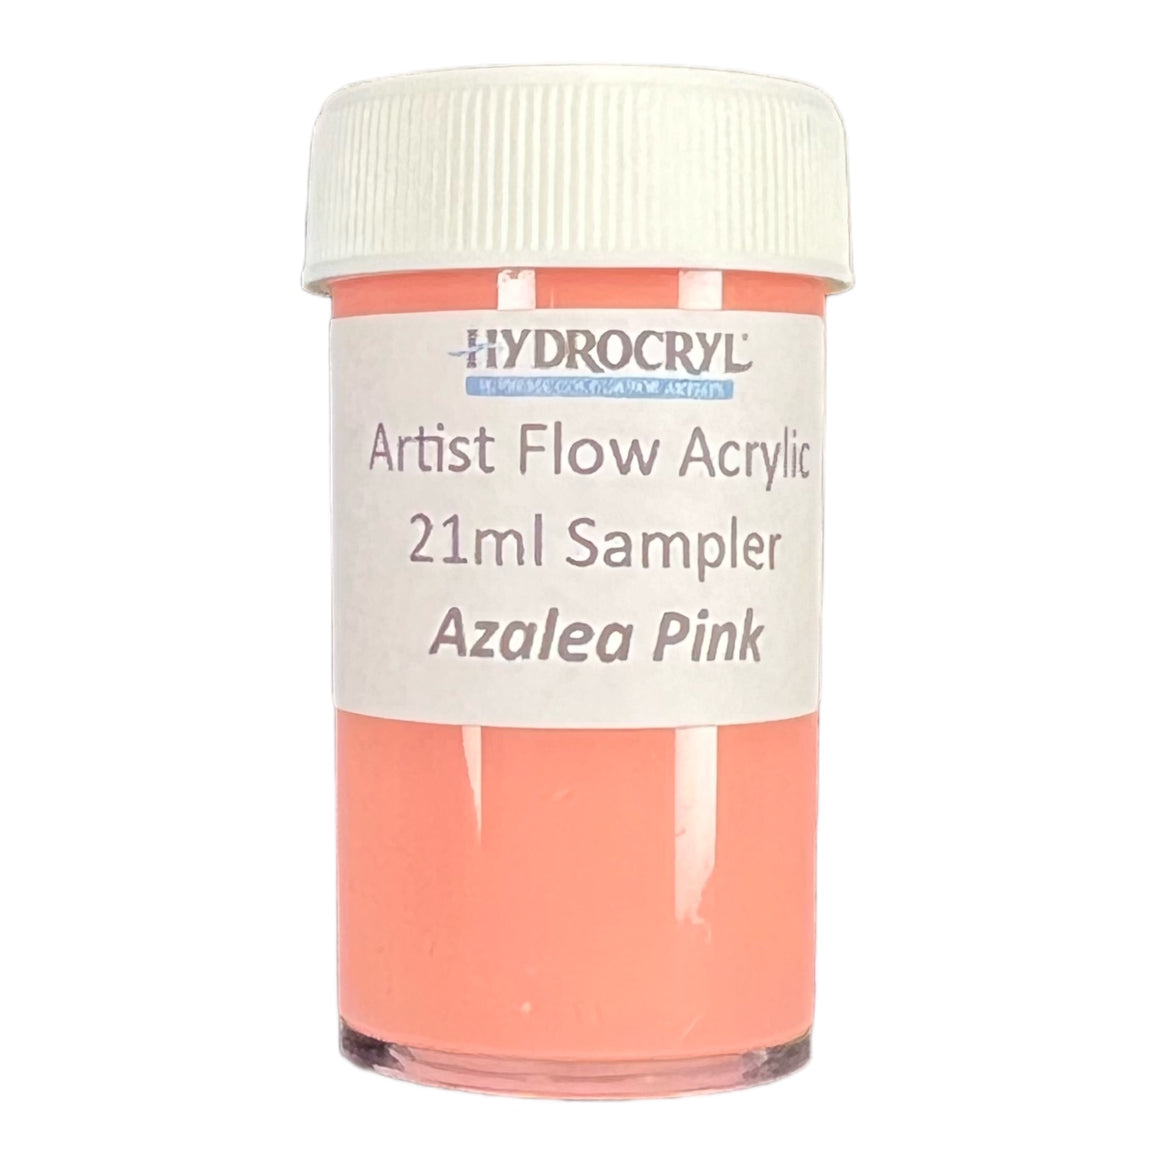 AZALEA PINK Hydrocryl Artist Flow Acrylic 21ml Sampler